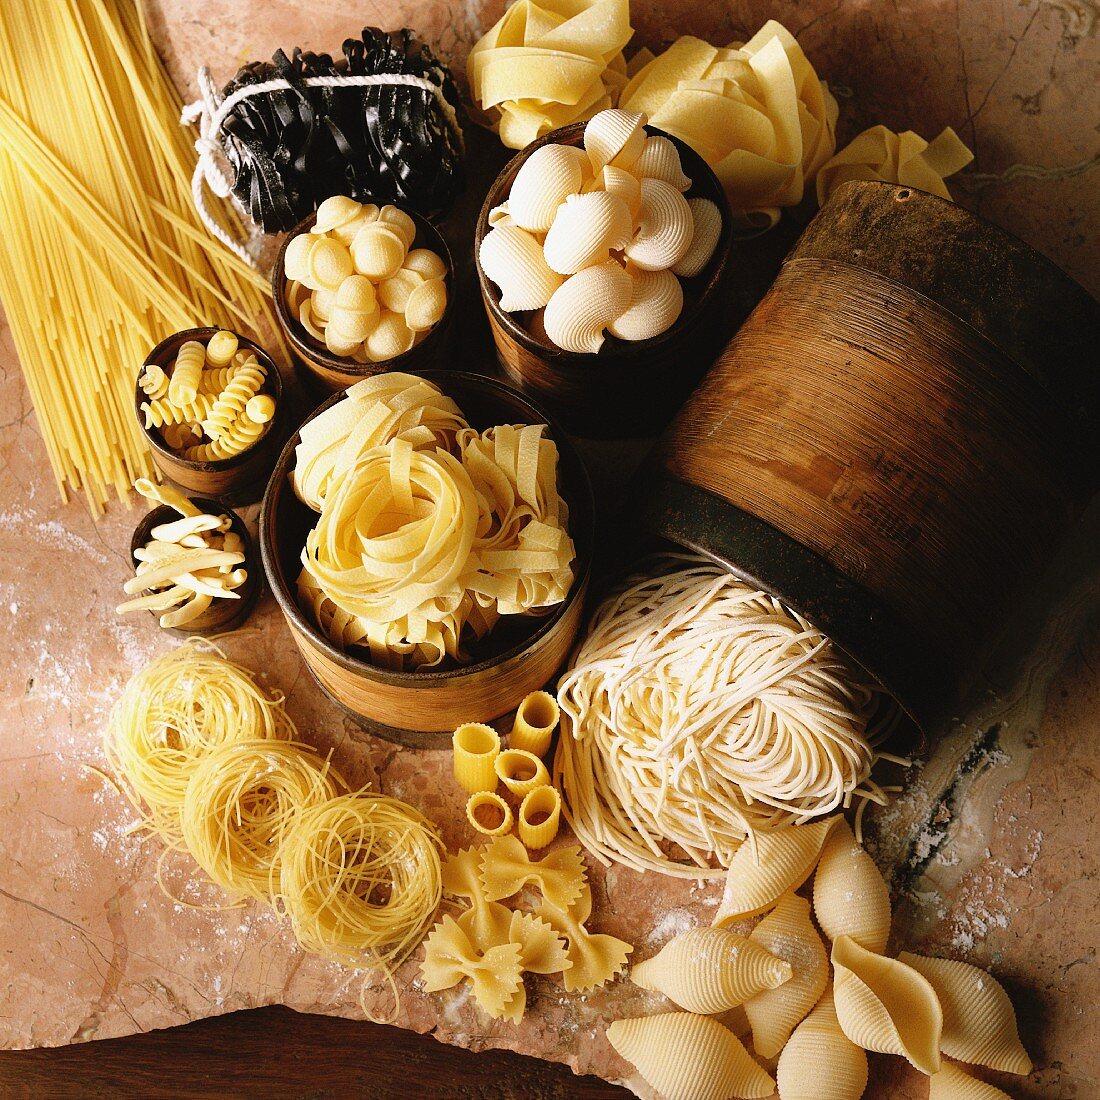 Arrangement of pasta